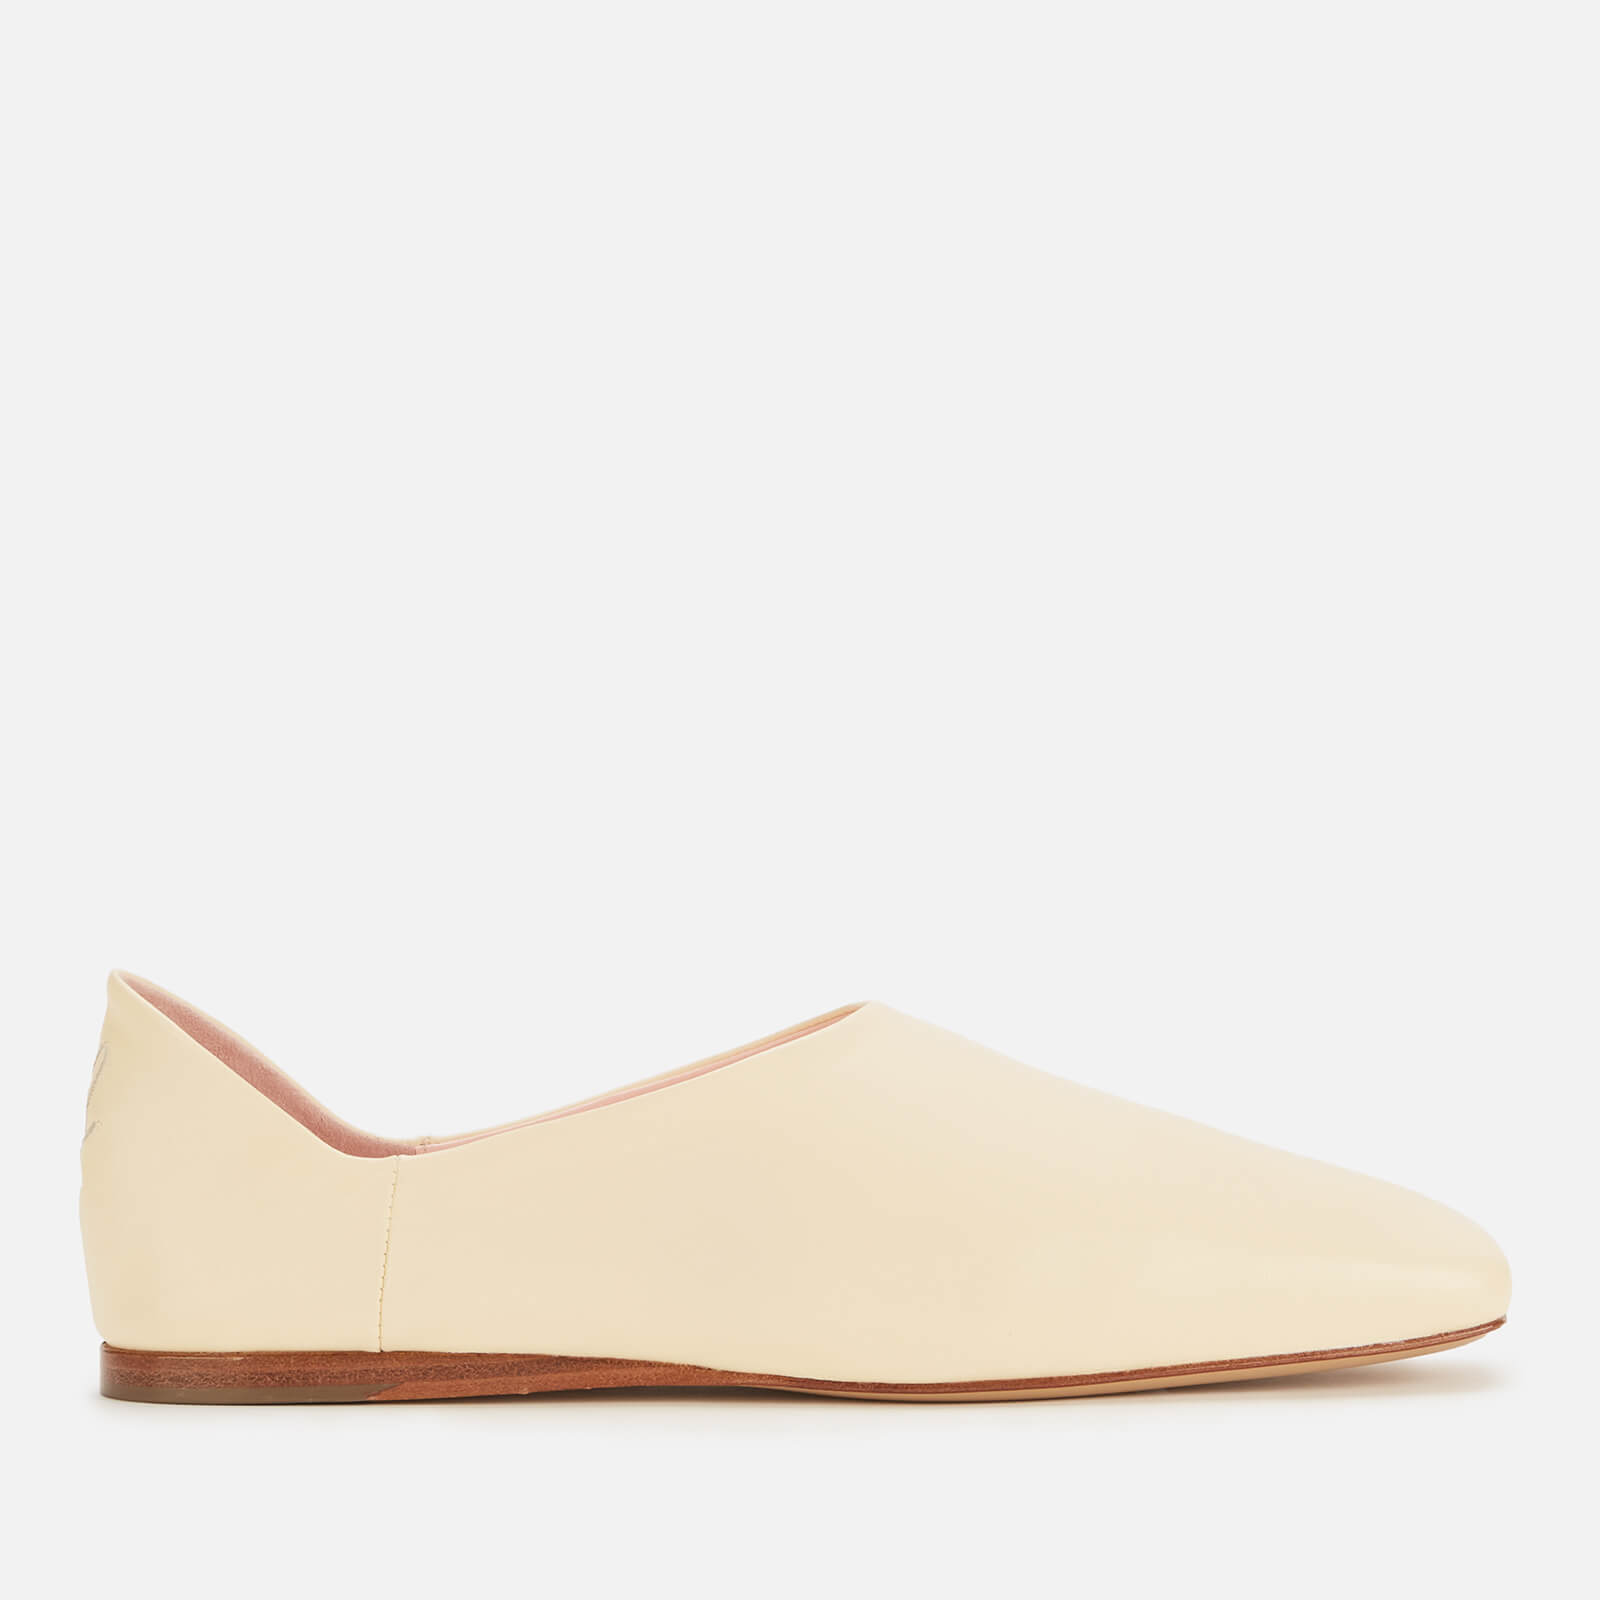 Mansur Gavriel Women's Square Toe Leather Loafers - Crema - UK 7